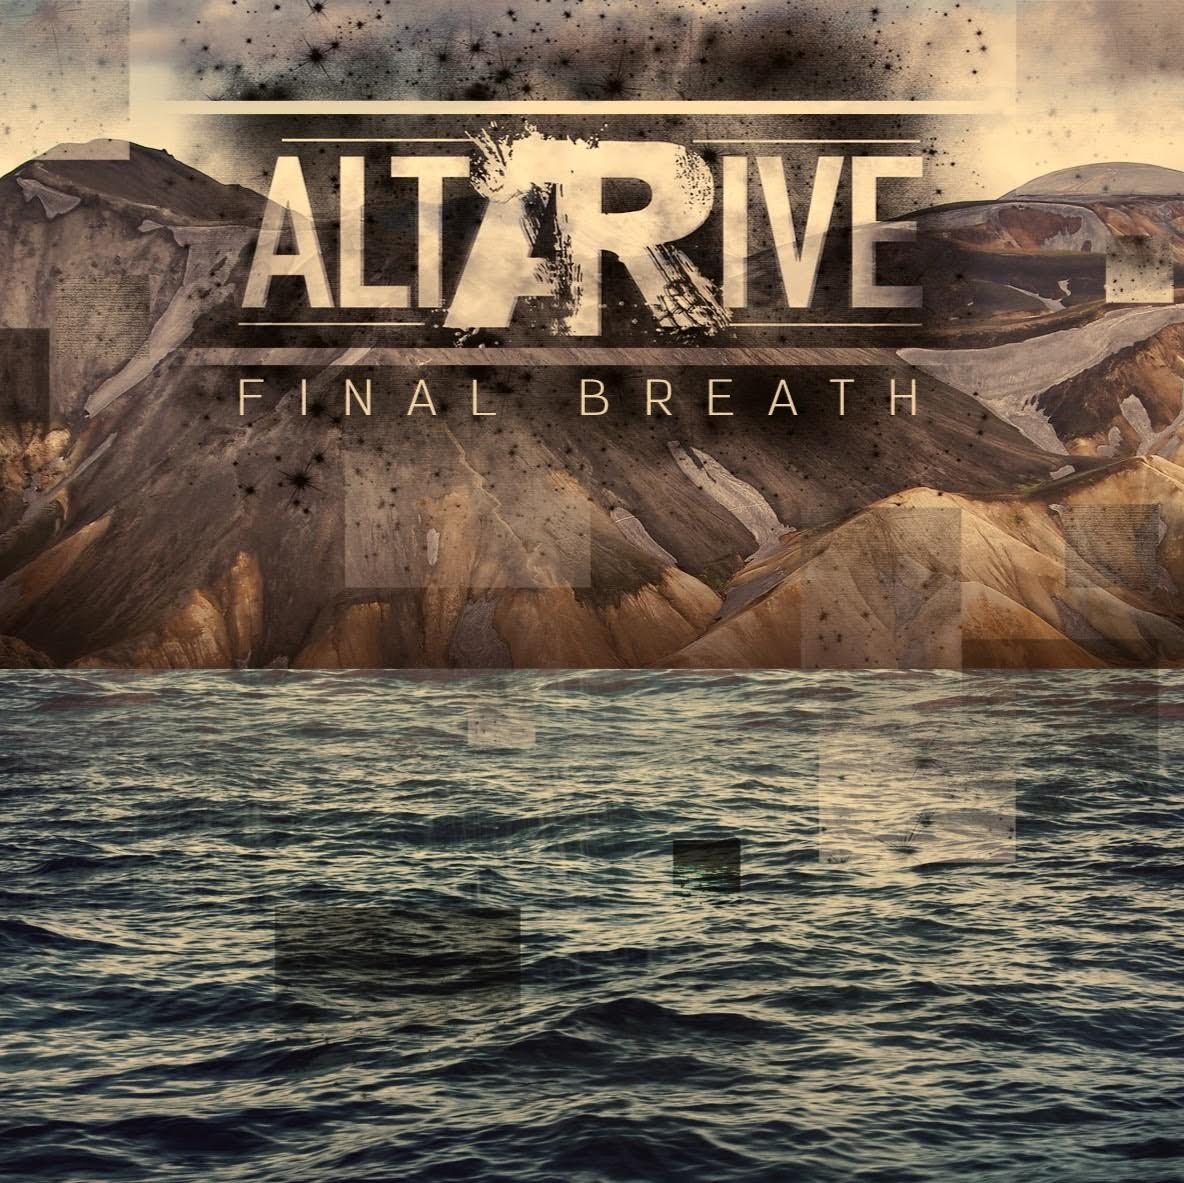 Altarive Final breath